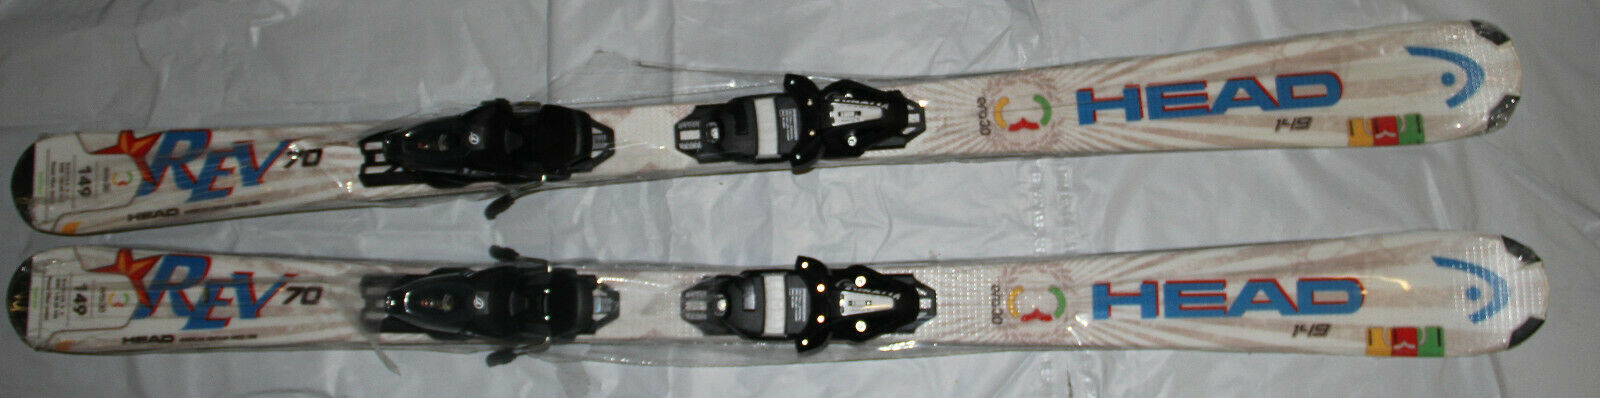 Head skis 149cm Head REV 70 Rocker skis + Tyrolia PR10 adjustable  bindings NEW